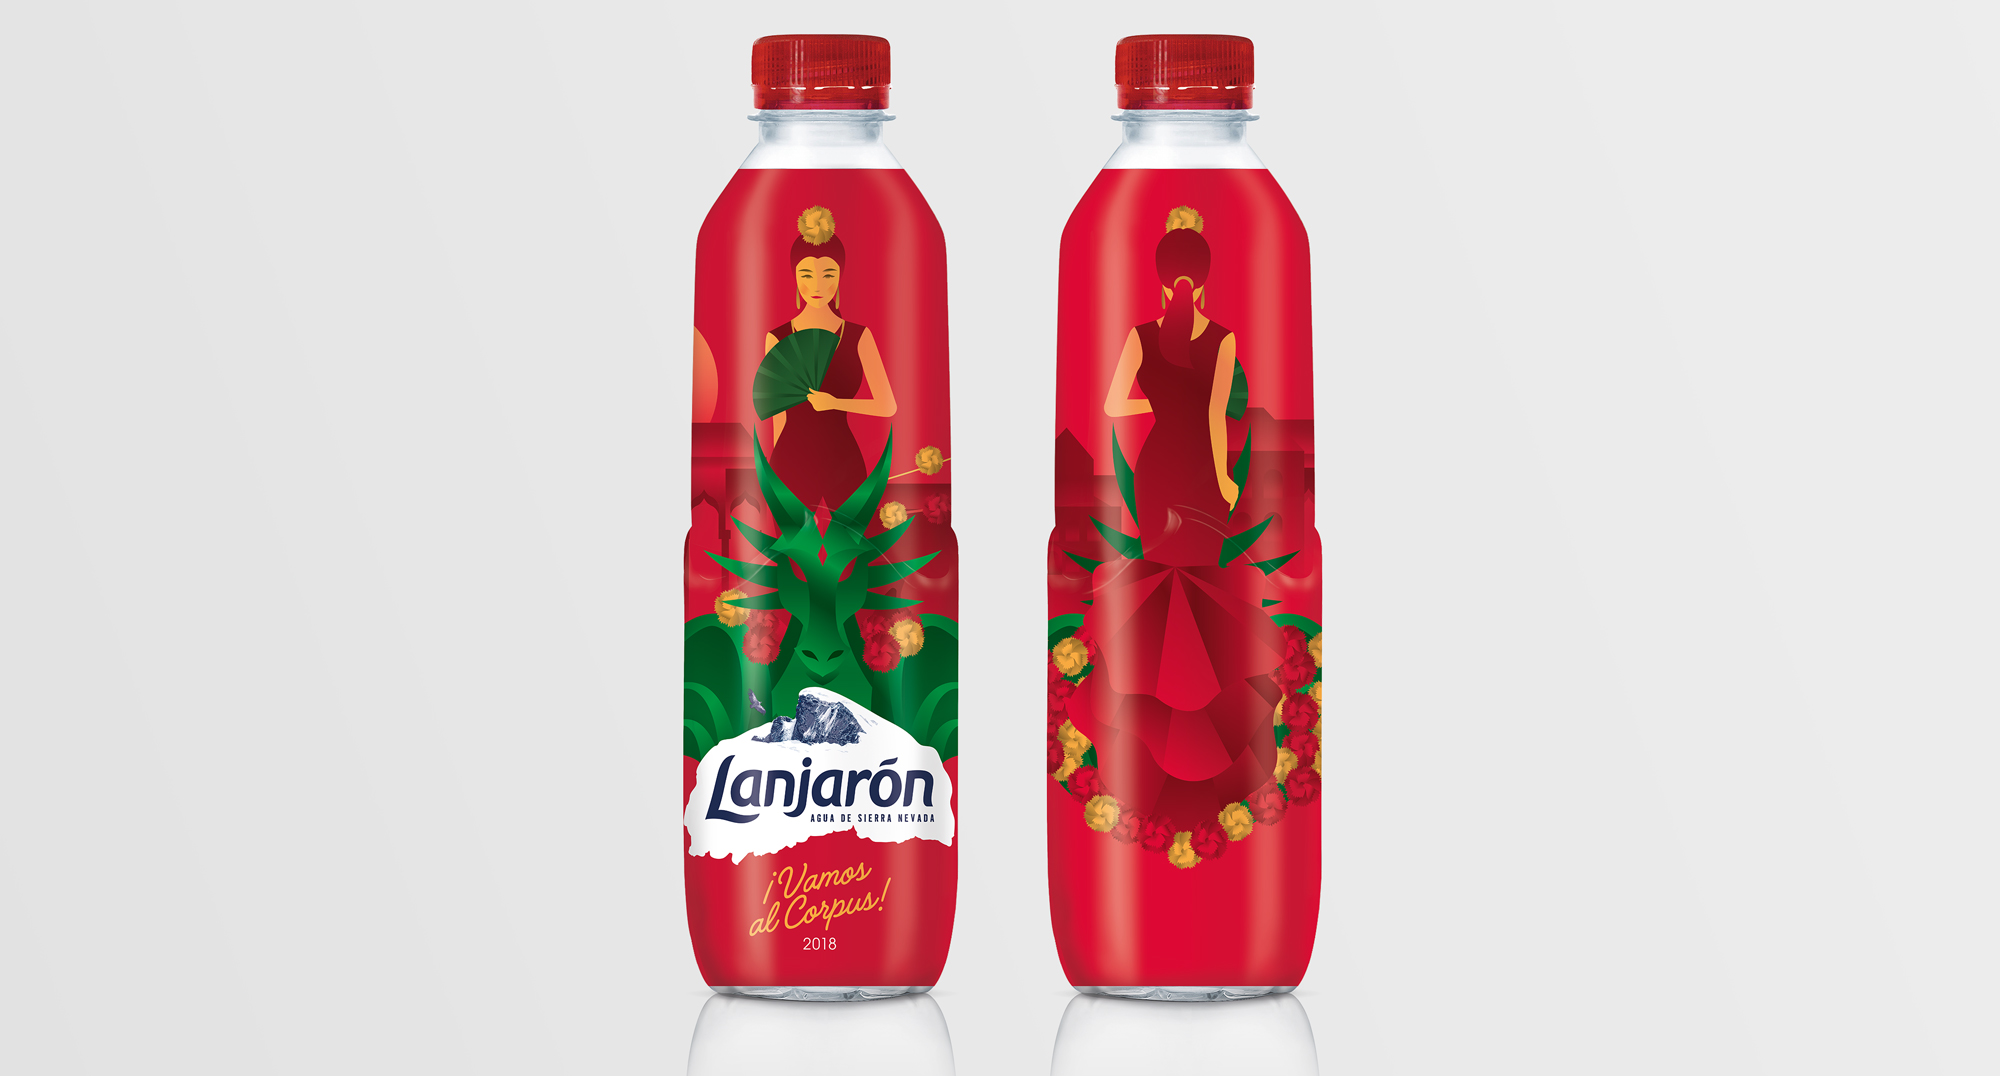 lajaron-corpus-botella-carlos anguis-ilustracion-packaging-barcelona